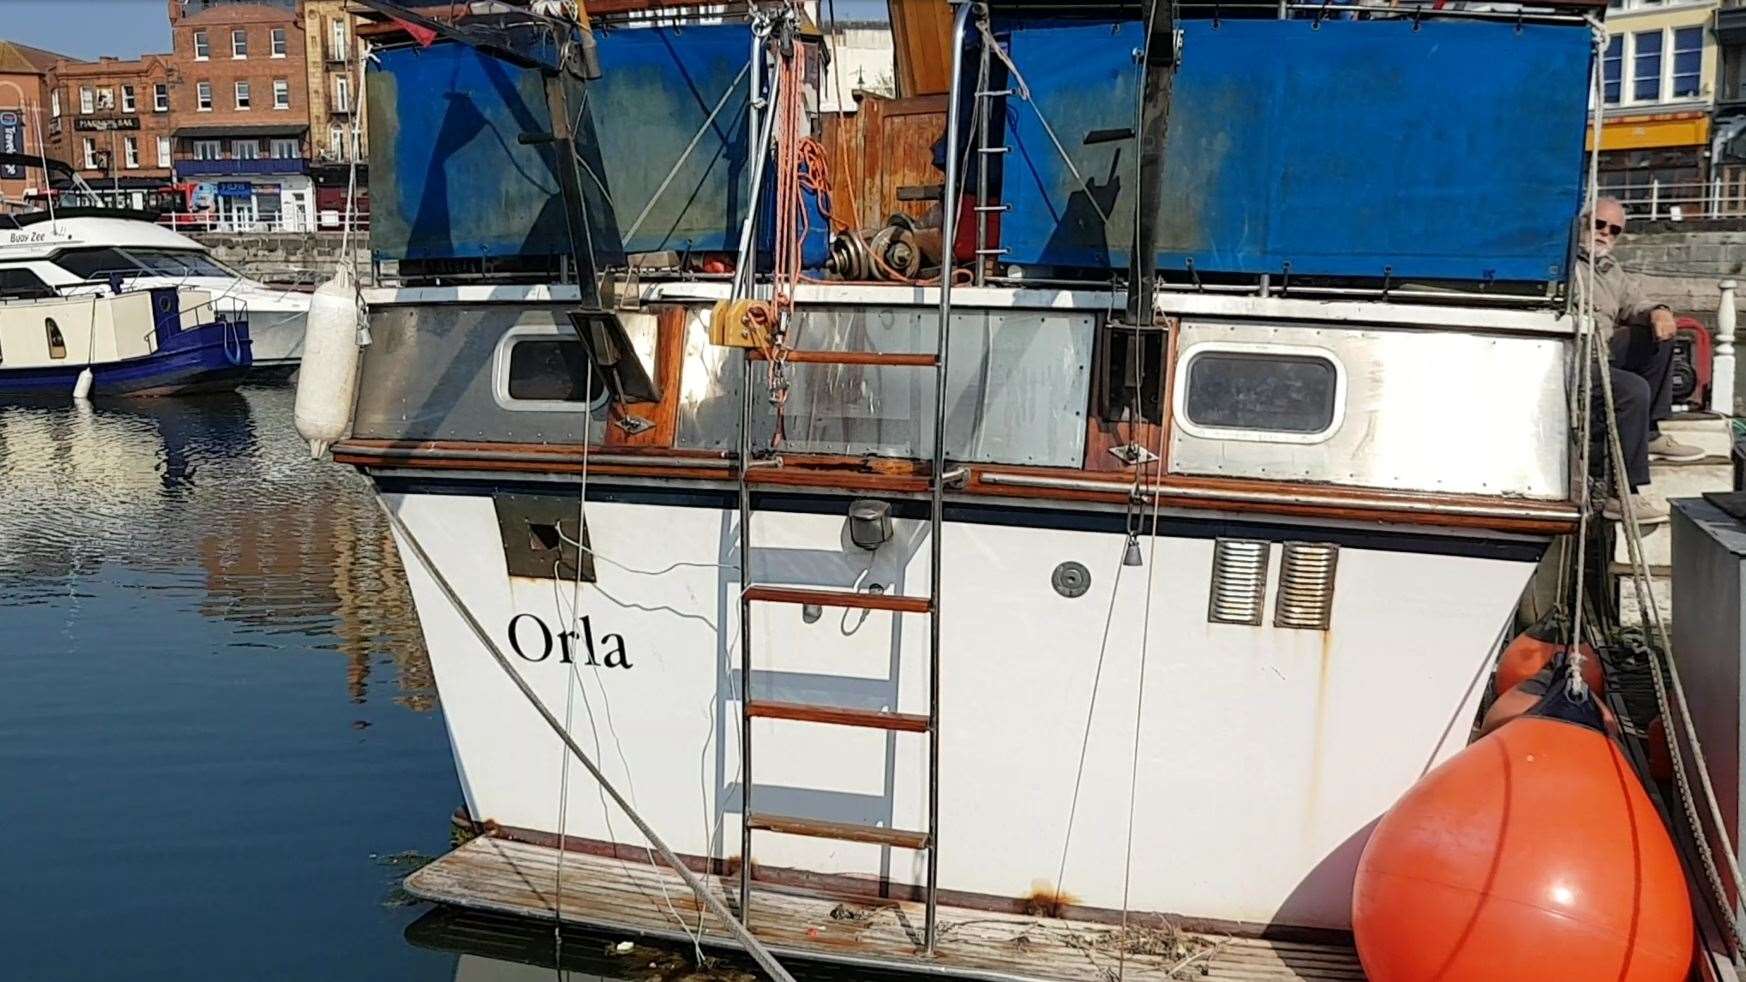 Mr Douglas' boat, Orla